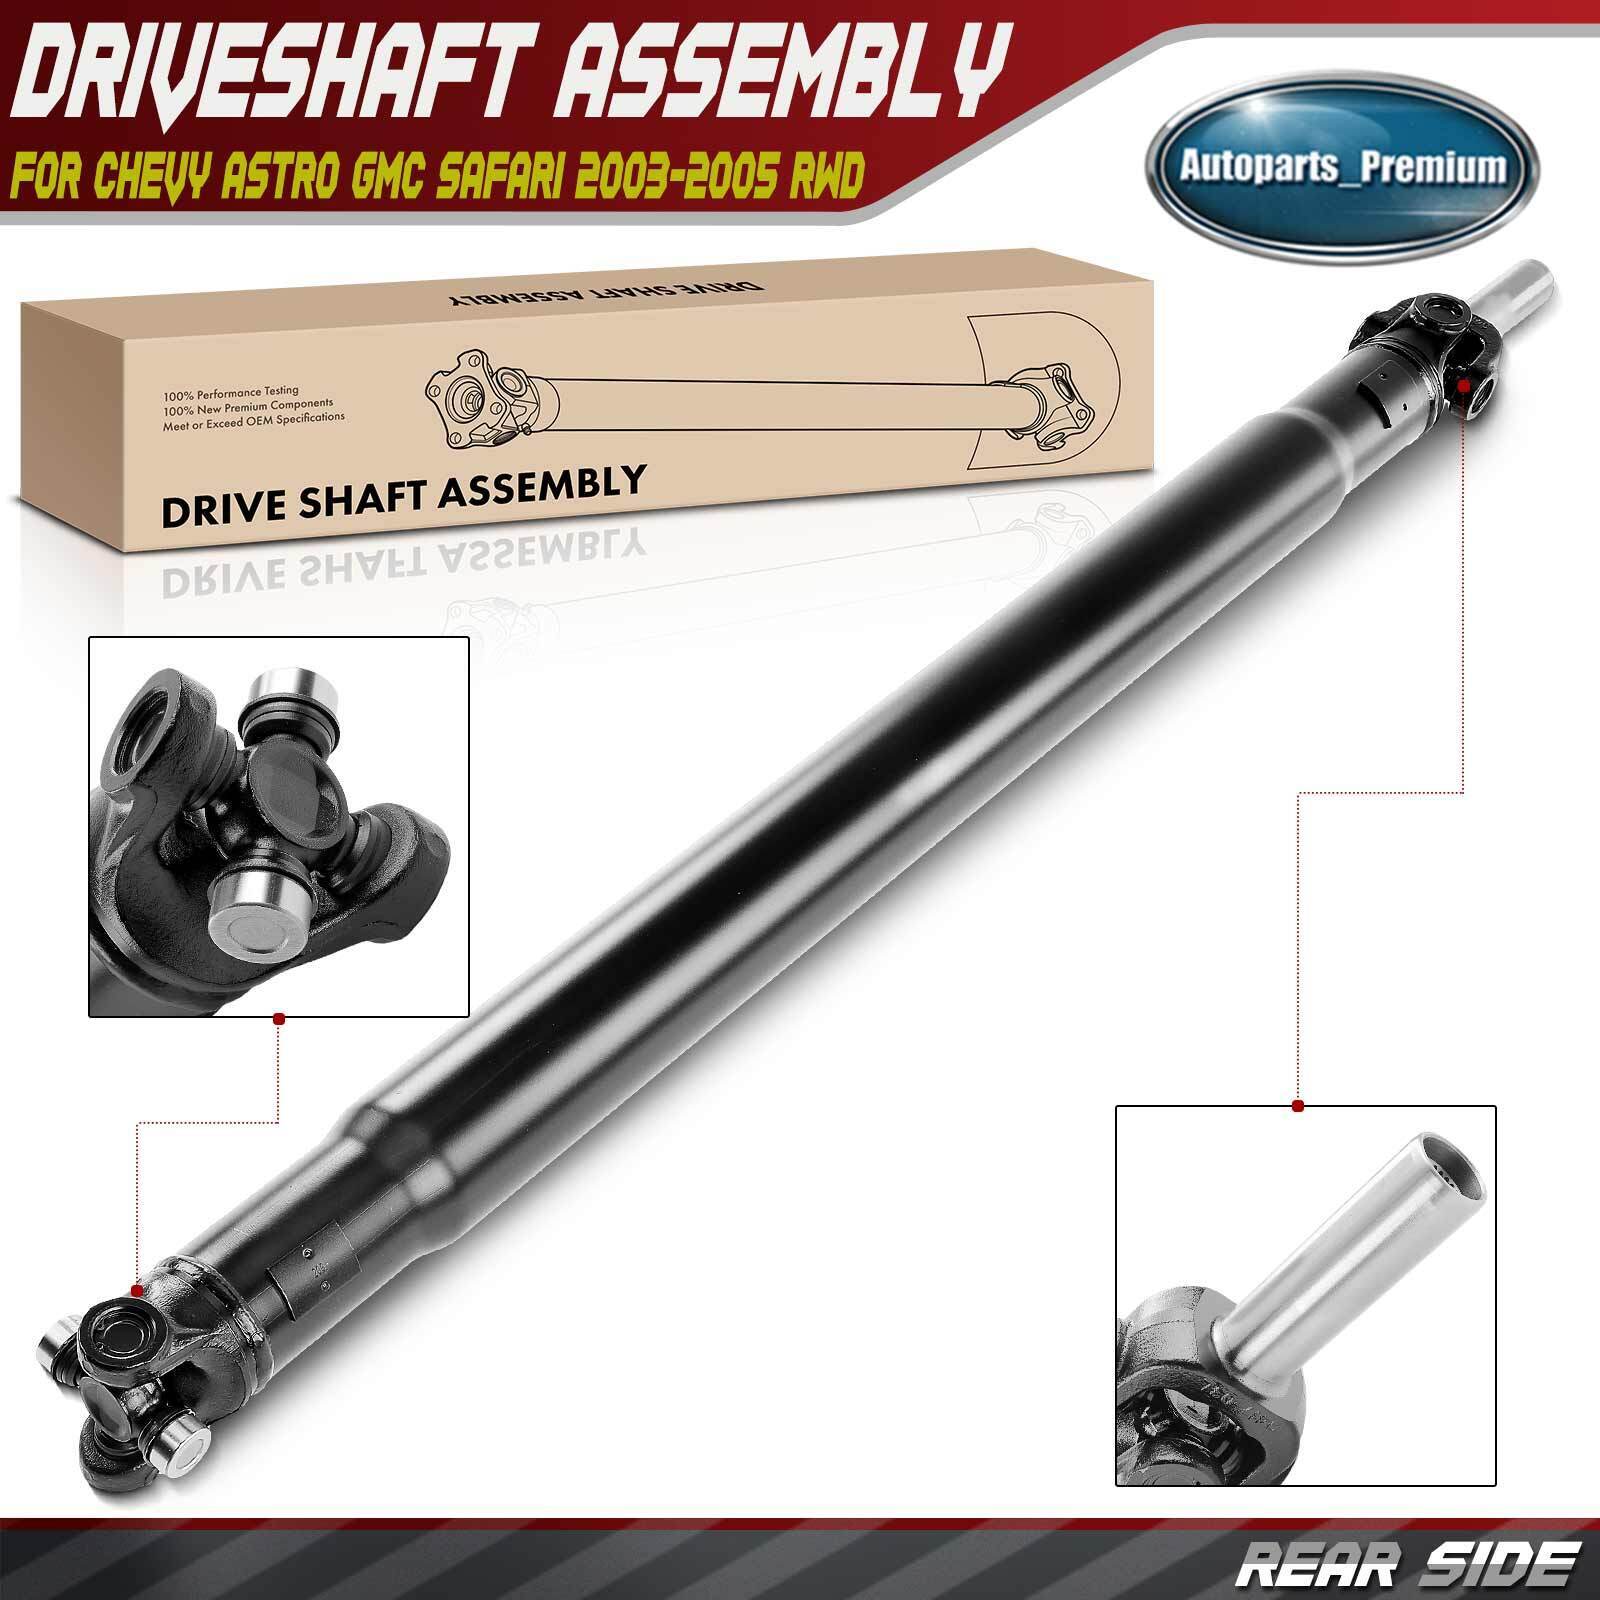 Rear Driveshaft Prop Shaft Assembly for Chevrolet Astro GMC Safari 2003-2005 RWD